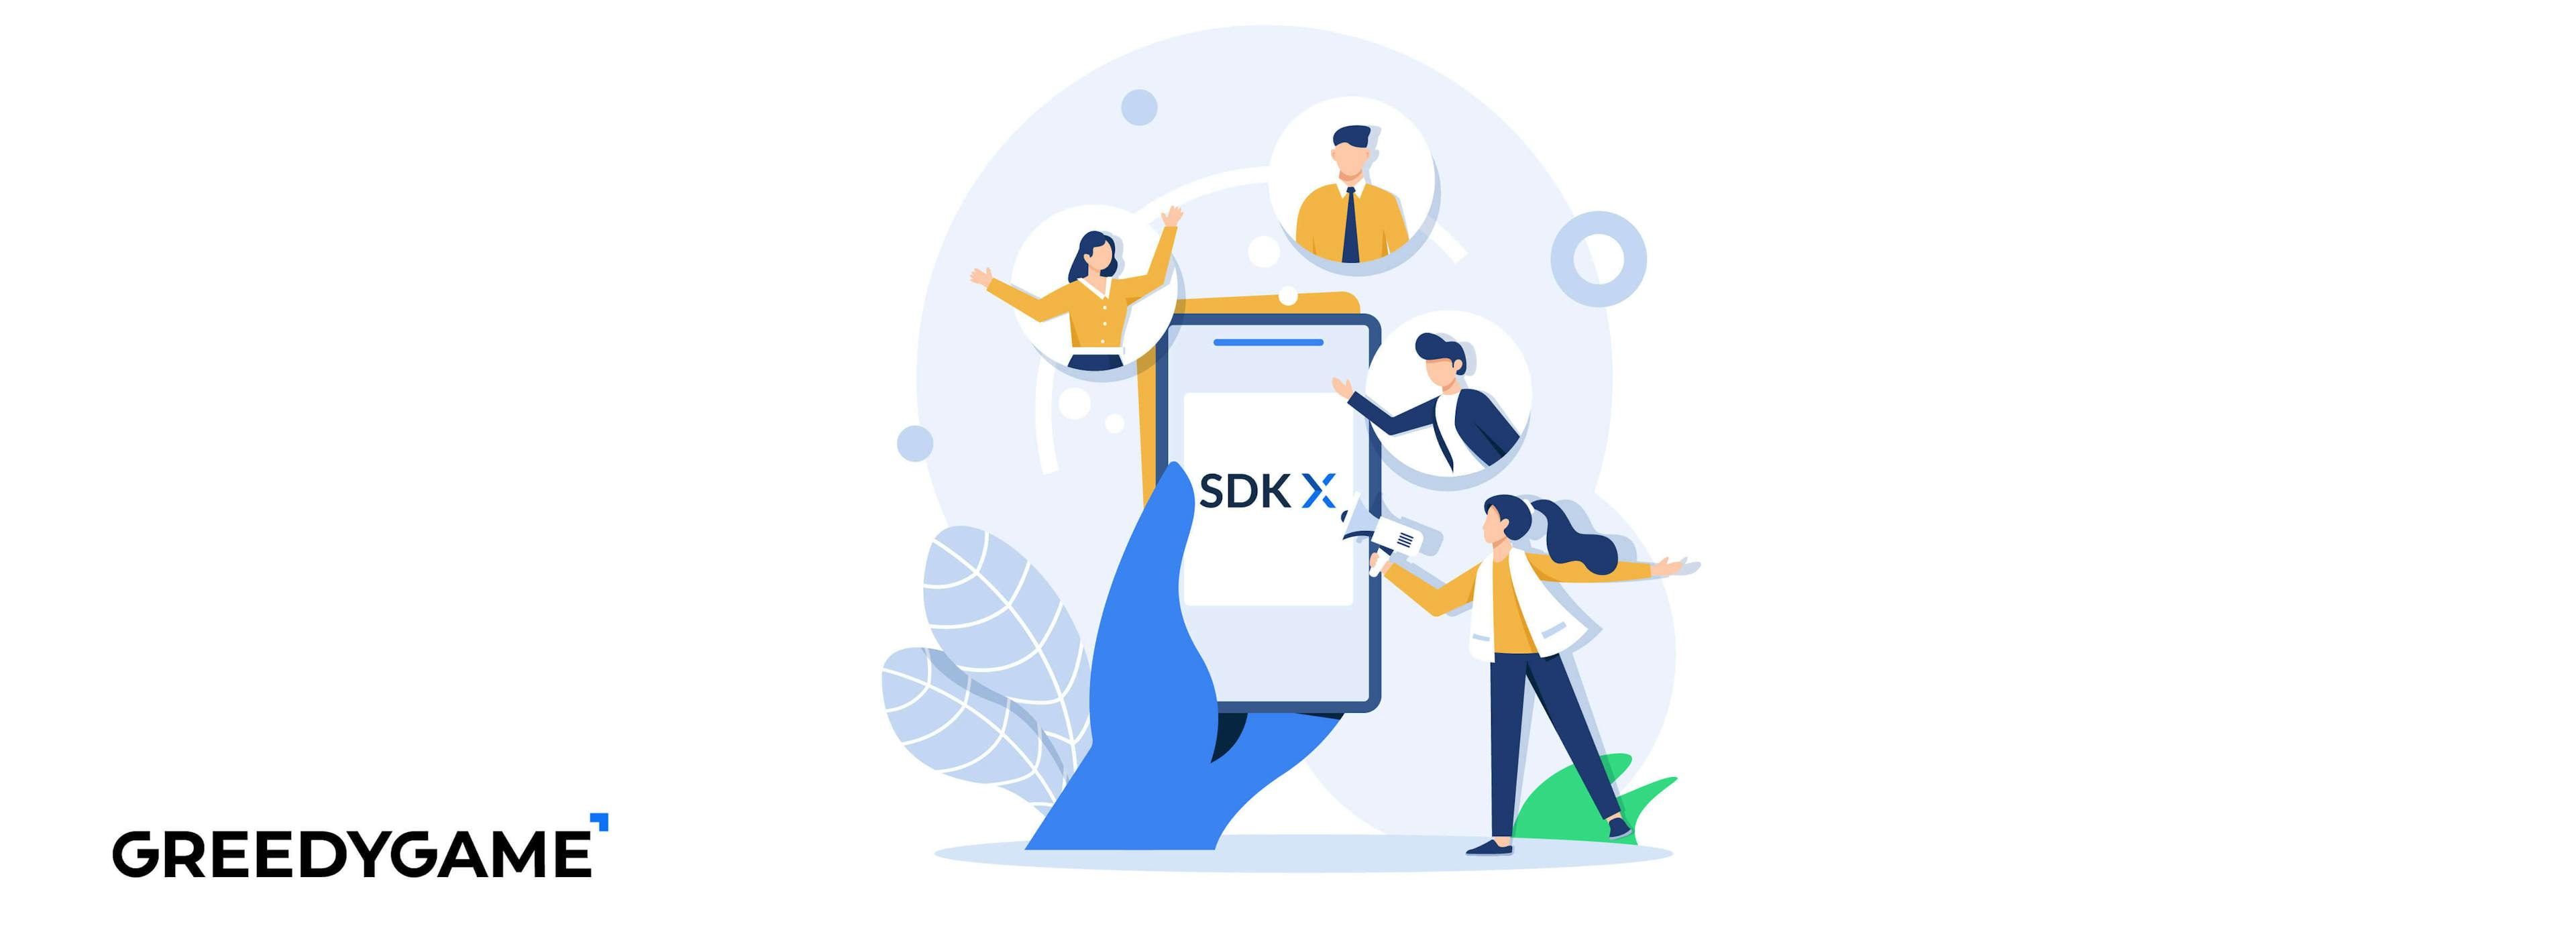 Steps to follow for SDK X integration